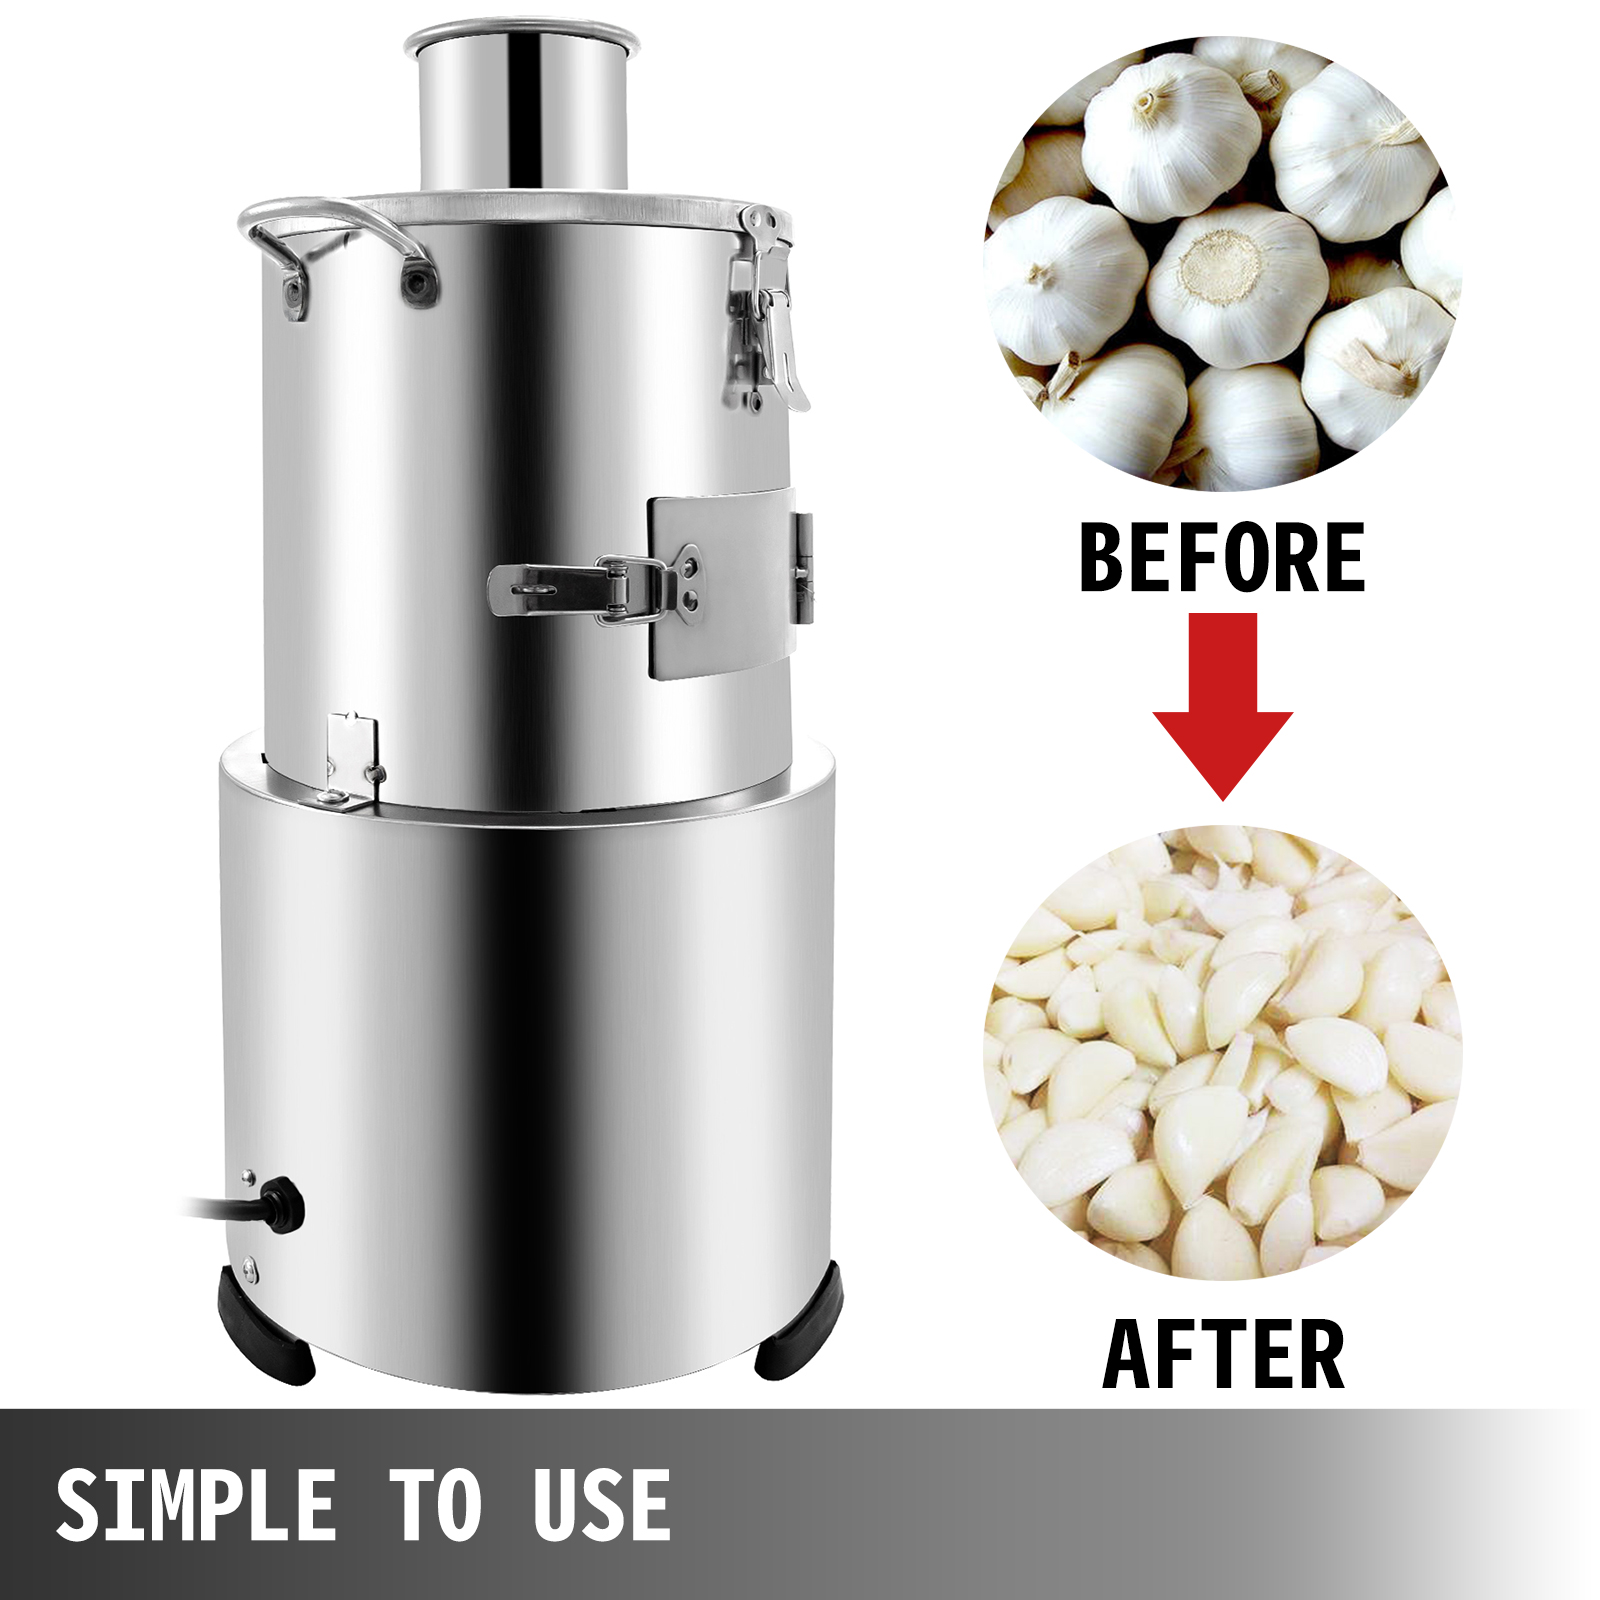 Techtongda Electric Garlic Peeler Machine for Dry Whole Garlic Peeling Stainless Steel 20-35kg/h, Size: Large, Silver